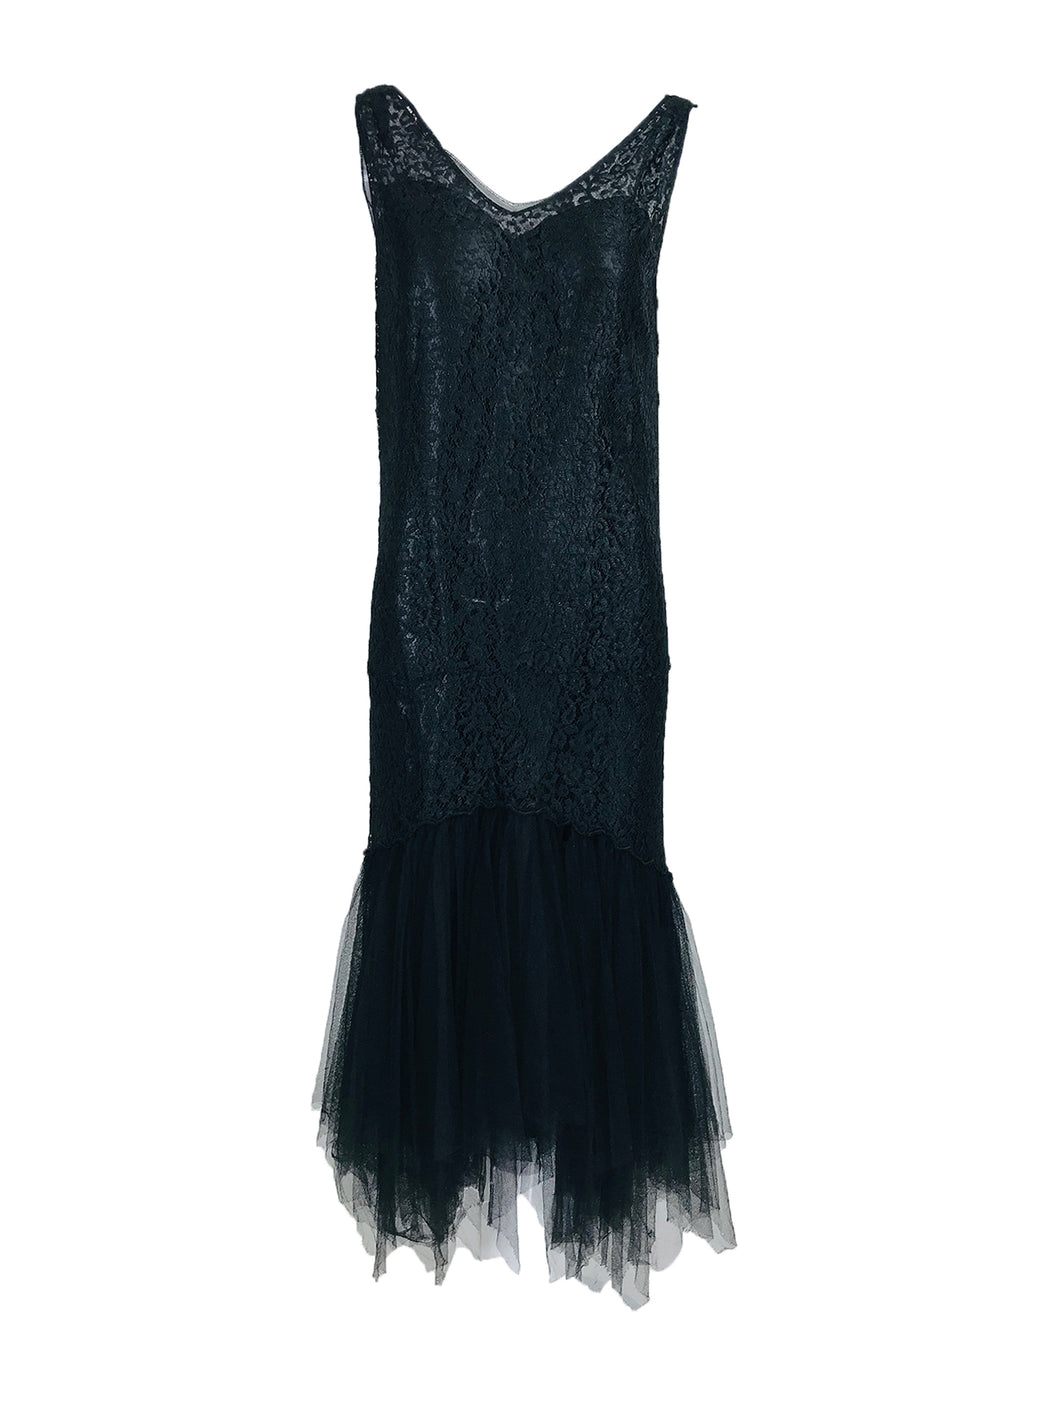  Vintage Black Lace and Tulle 1920s Flapper Dresss